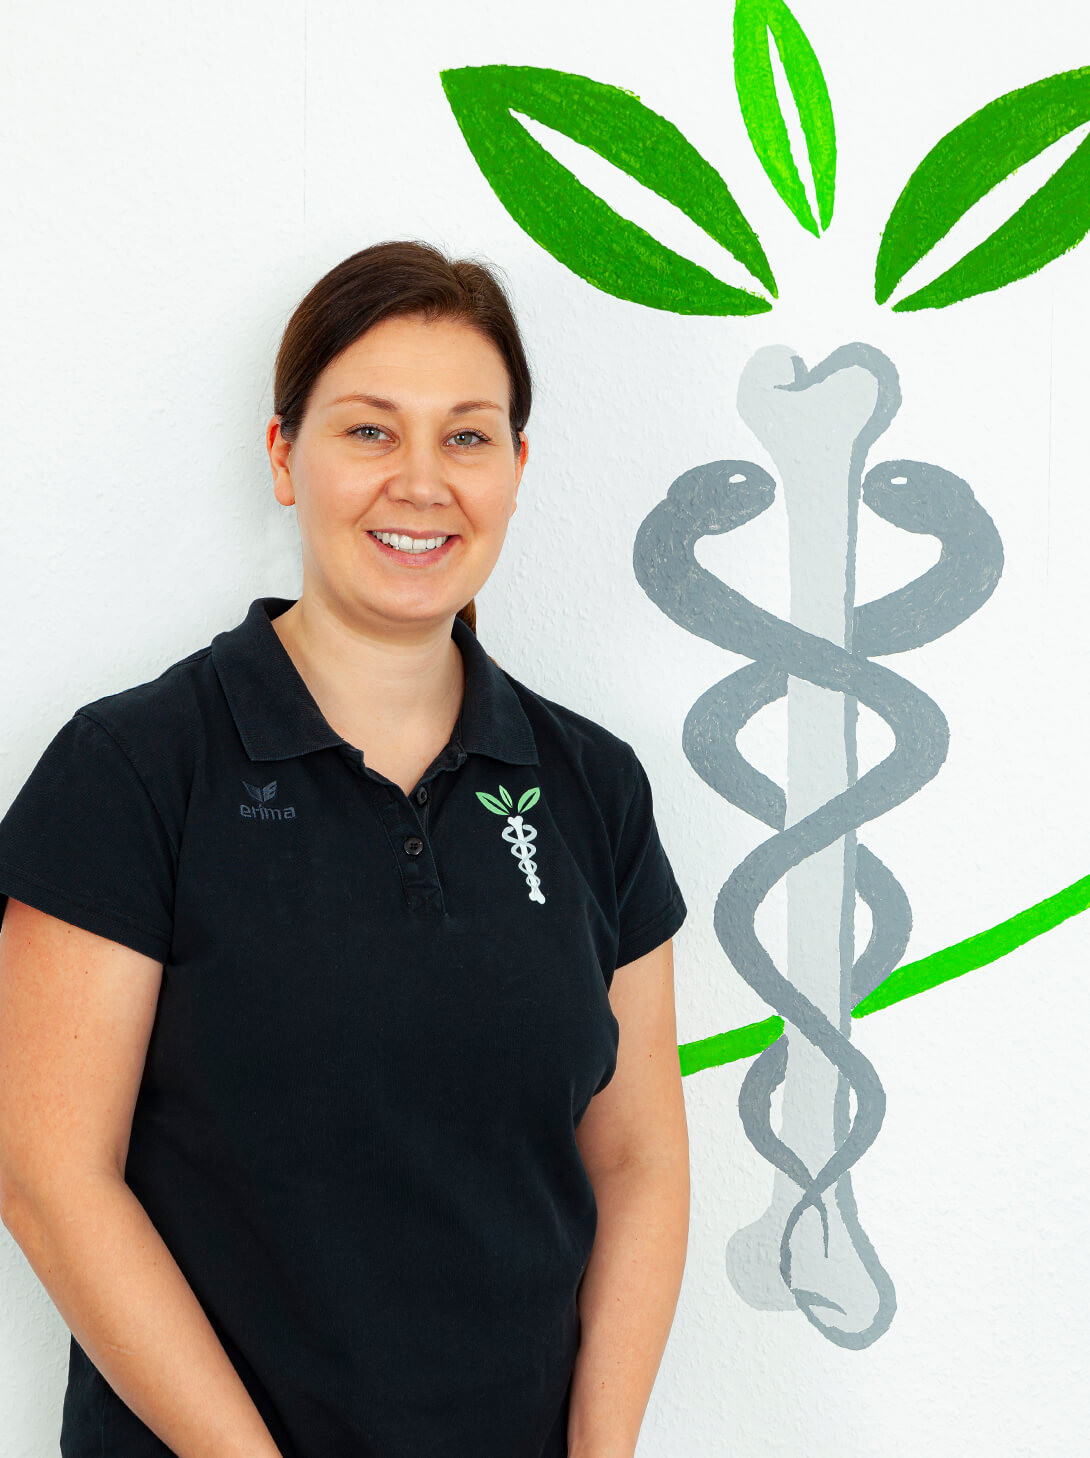 Gesundheitspraxis am Niederrhein : Nina Lessar, Physiotherapeutin